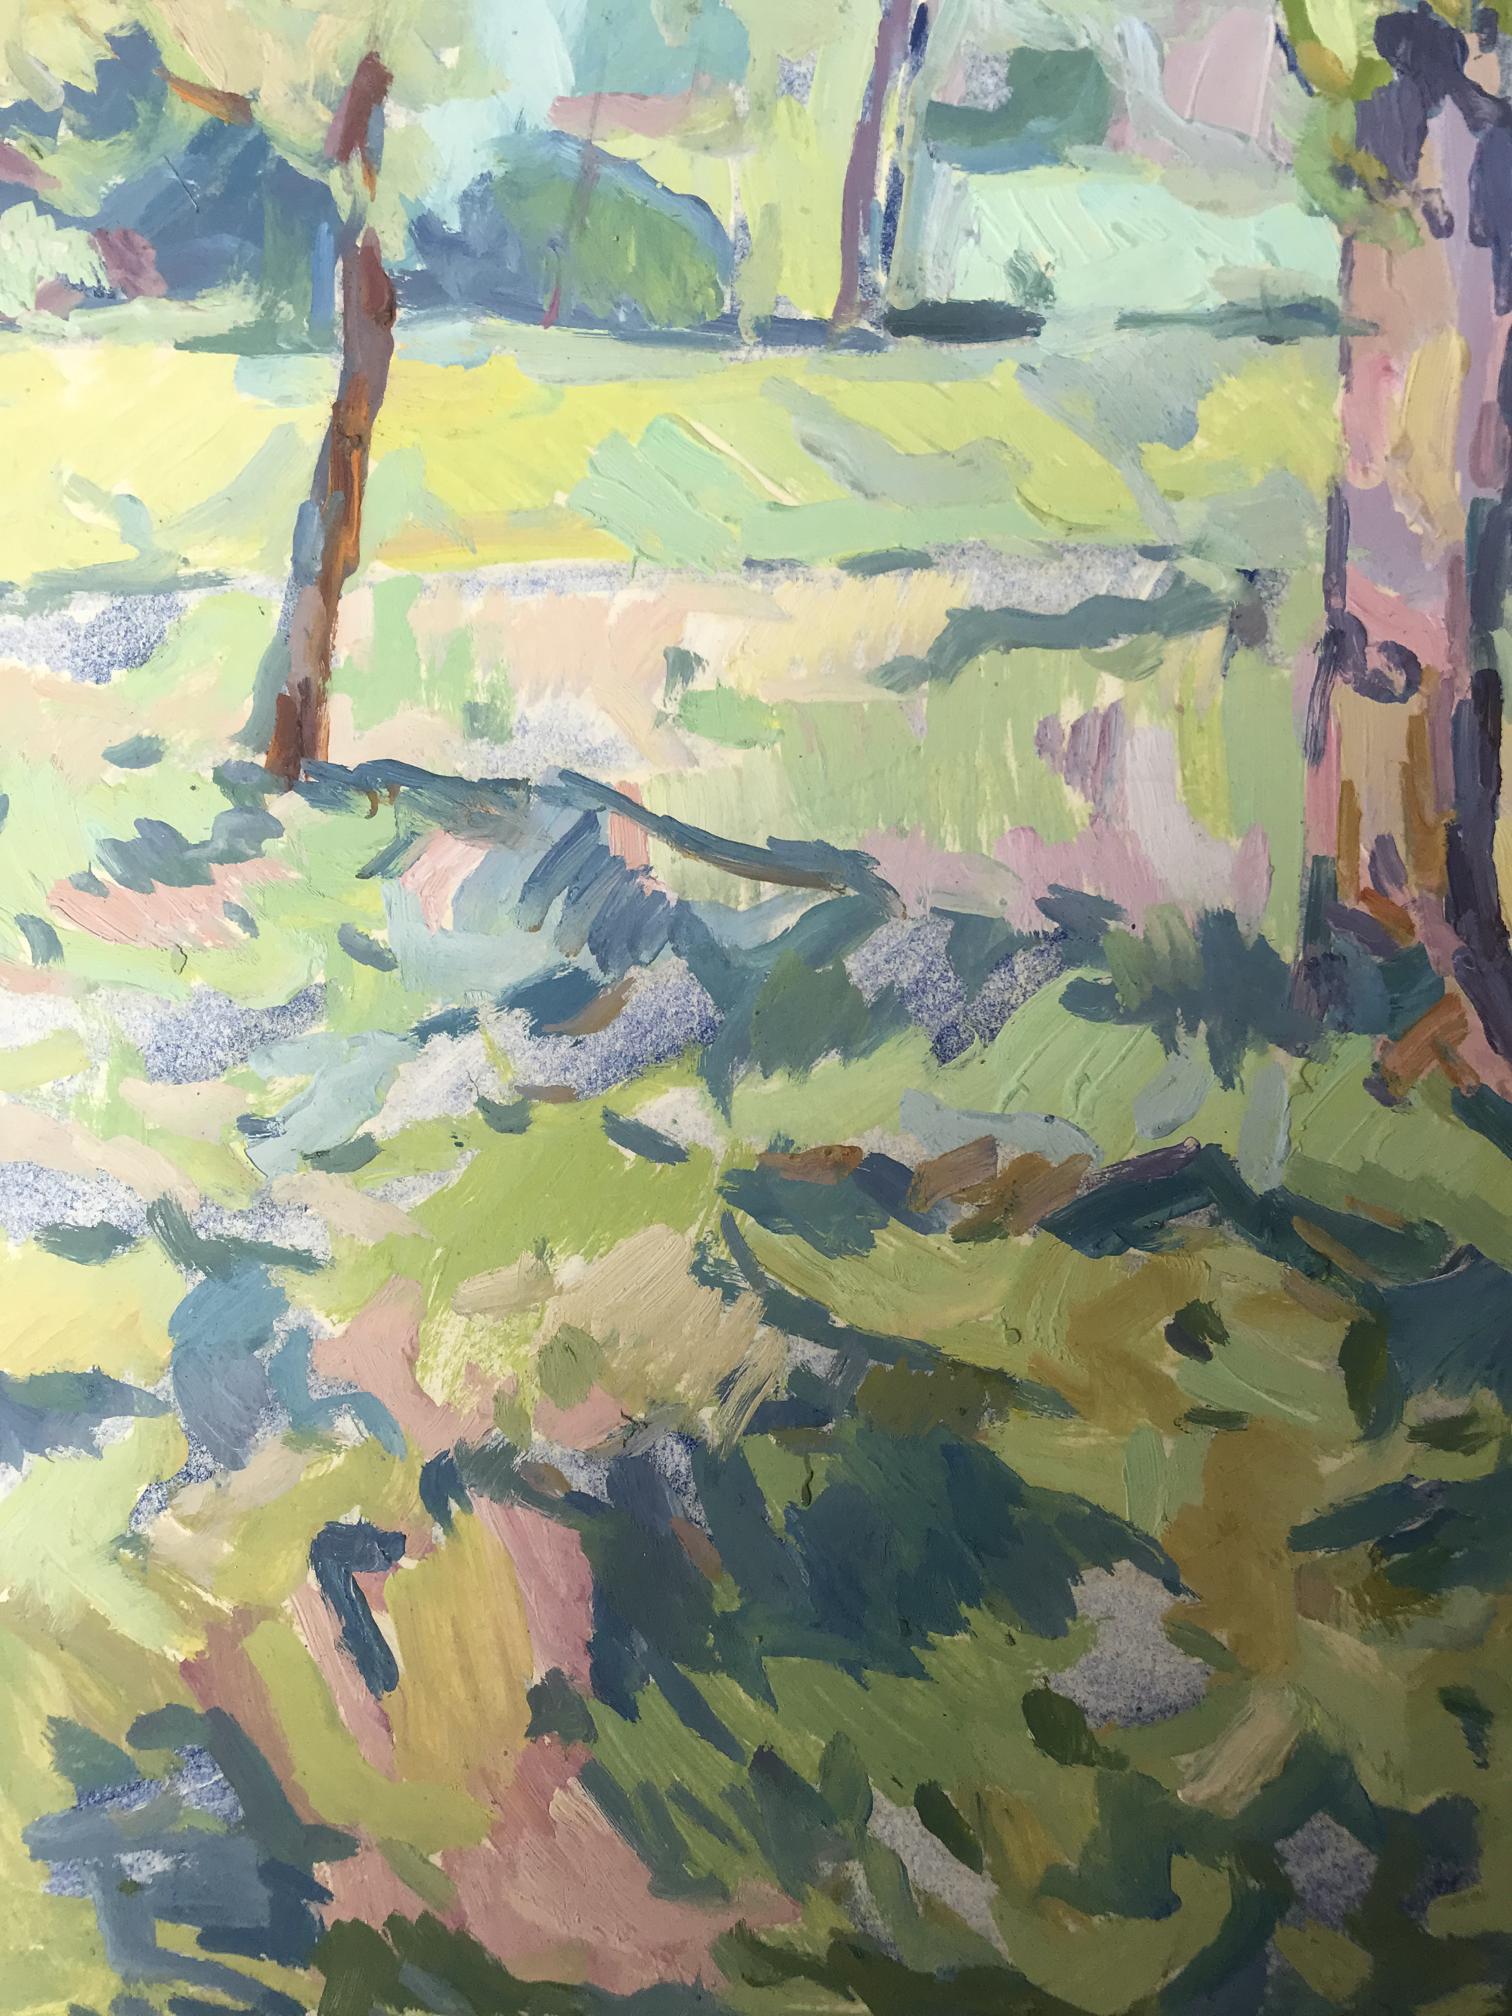 Peter Dobrev's oil artwork portrays a park set in a forest